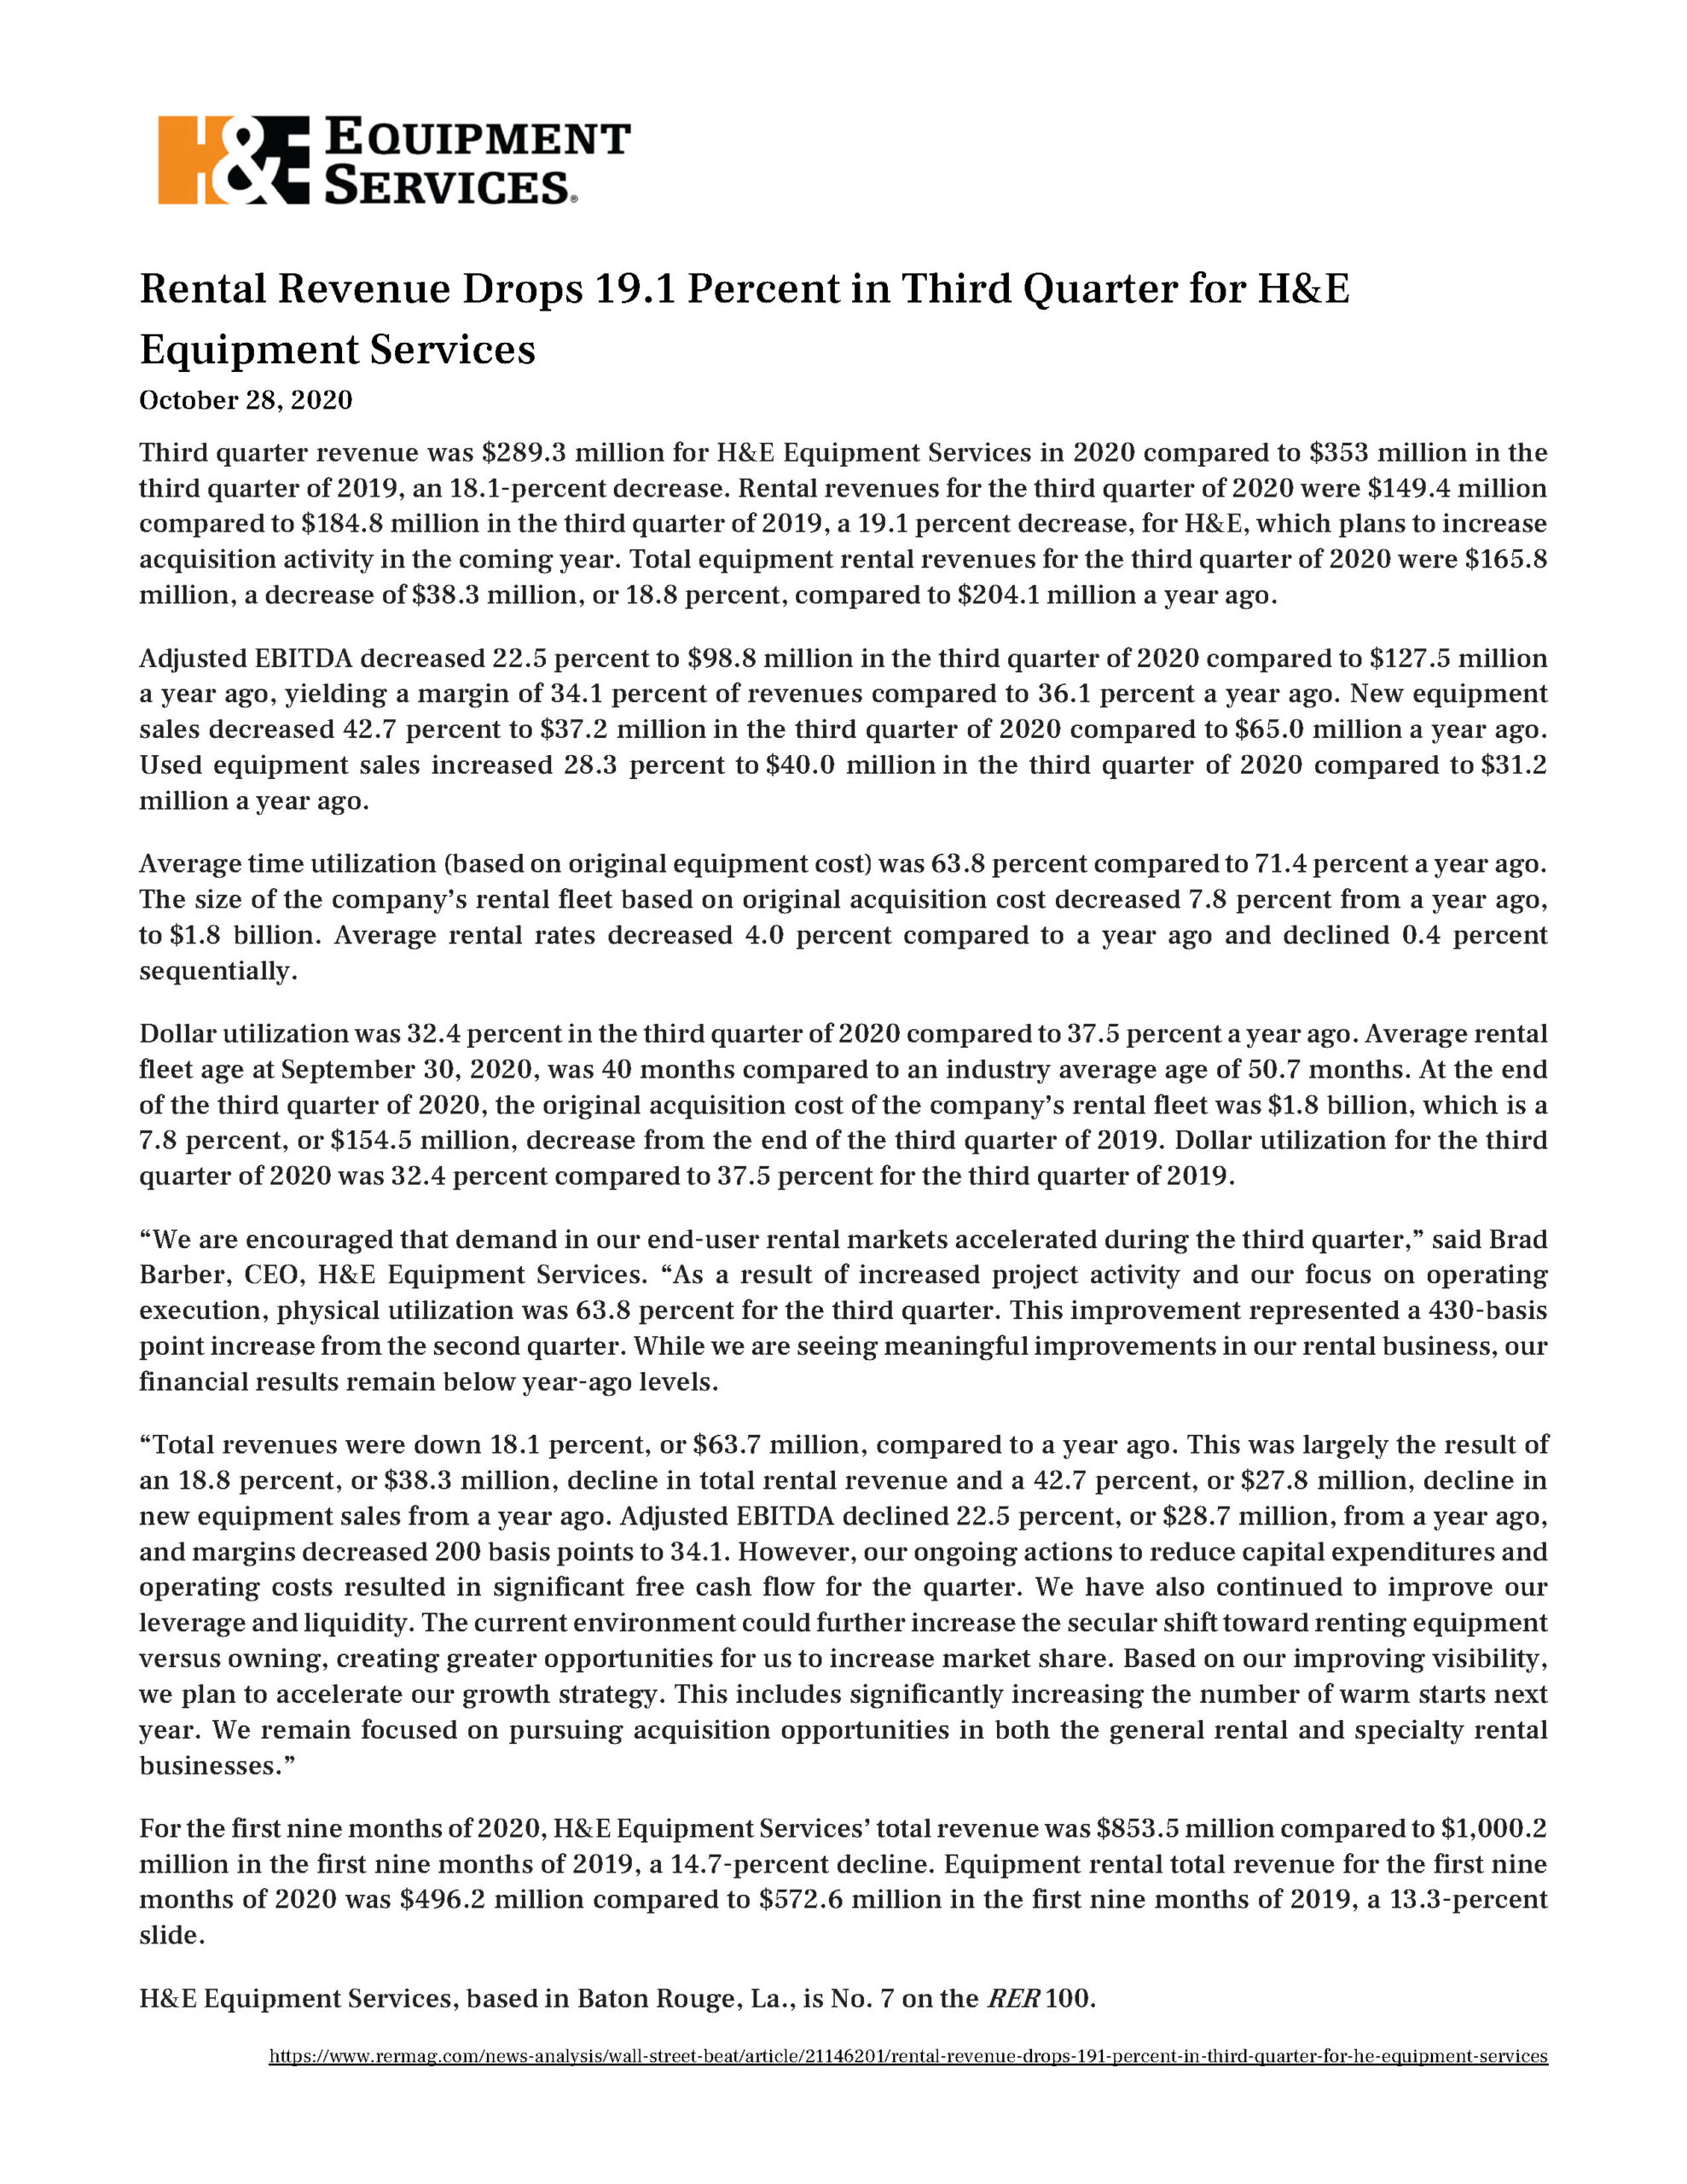 Rental Revenue Drops 19.1 Percent in Third Quarter for H&E Equipment Services 10.28.2020